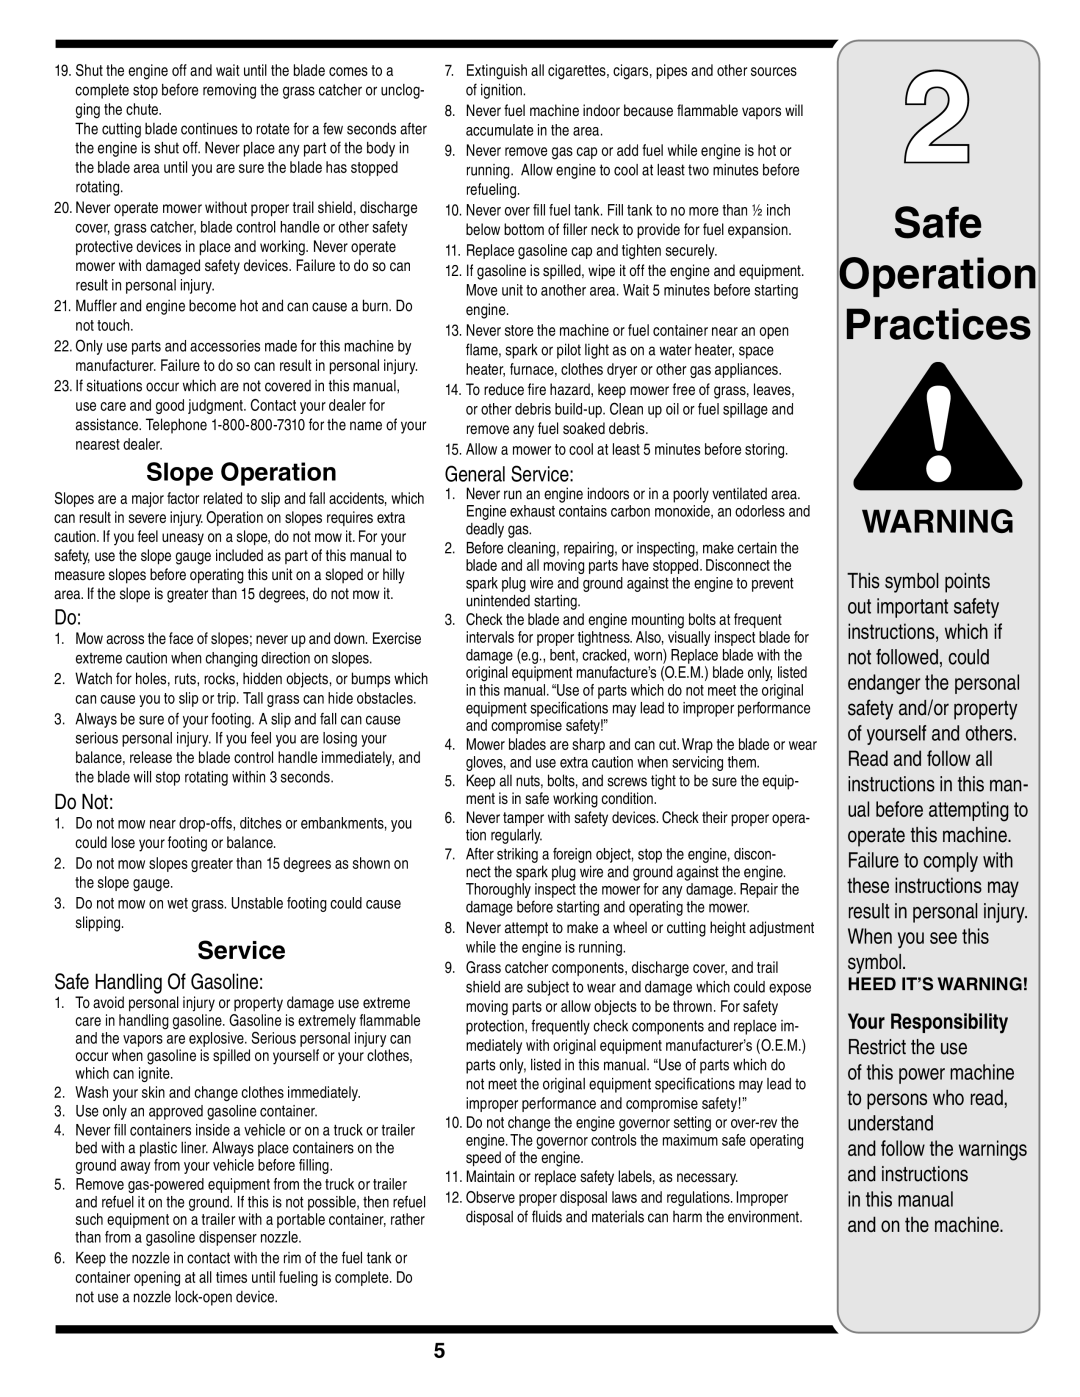 MTD 584 warranty Safe Operation Practices, Slope Operation, Service 